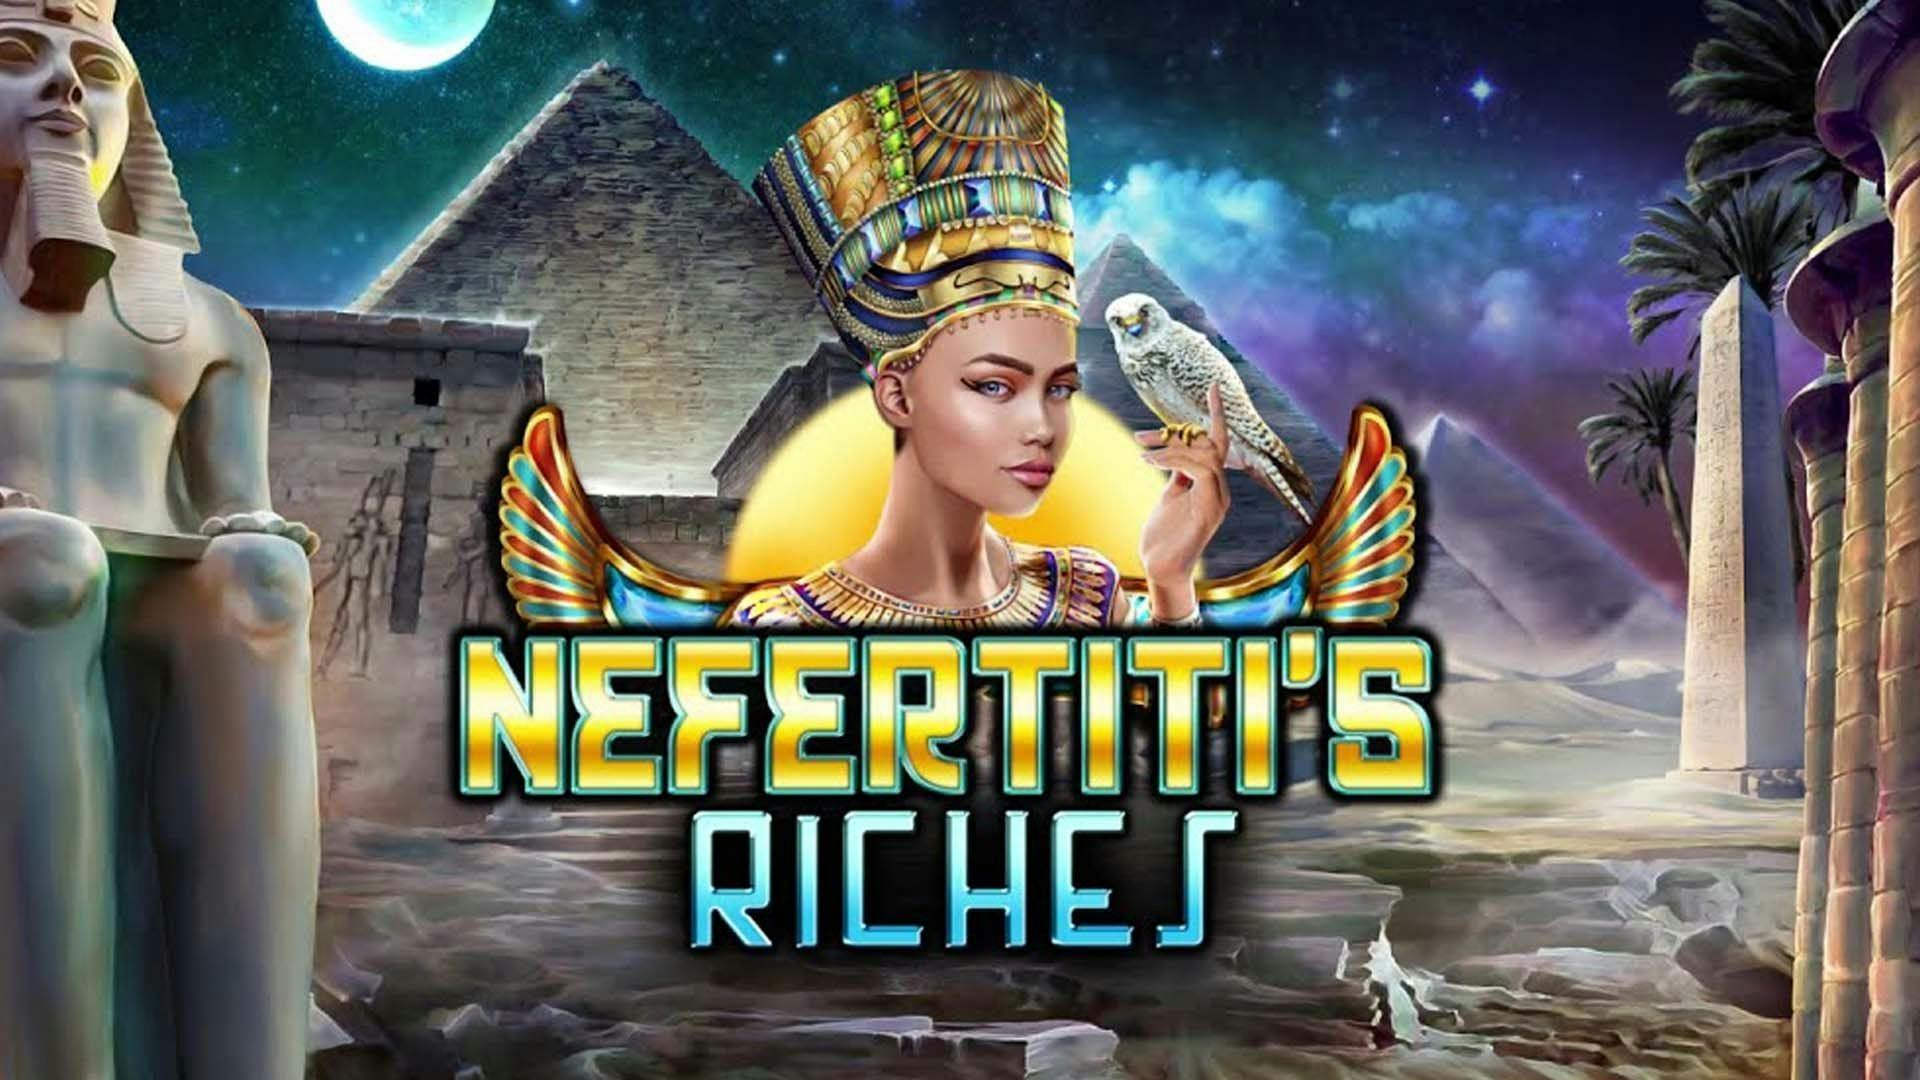 Nefertiti's Riches Slot Machine Online Free Game Play